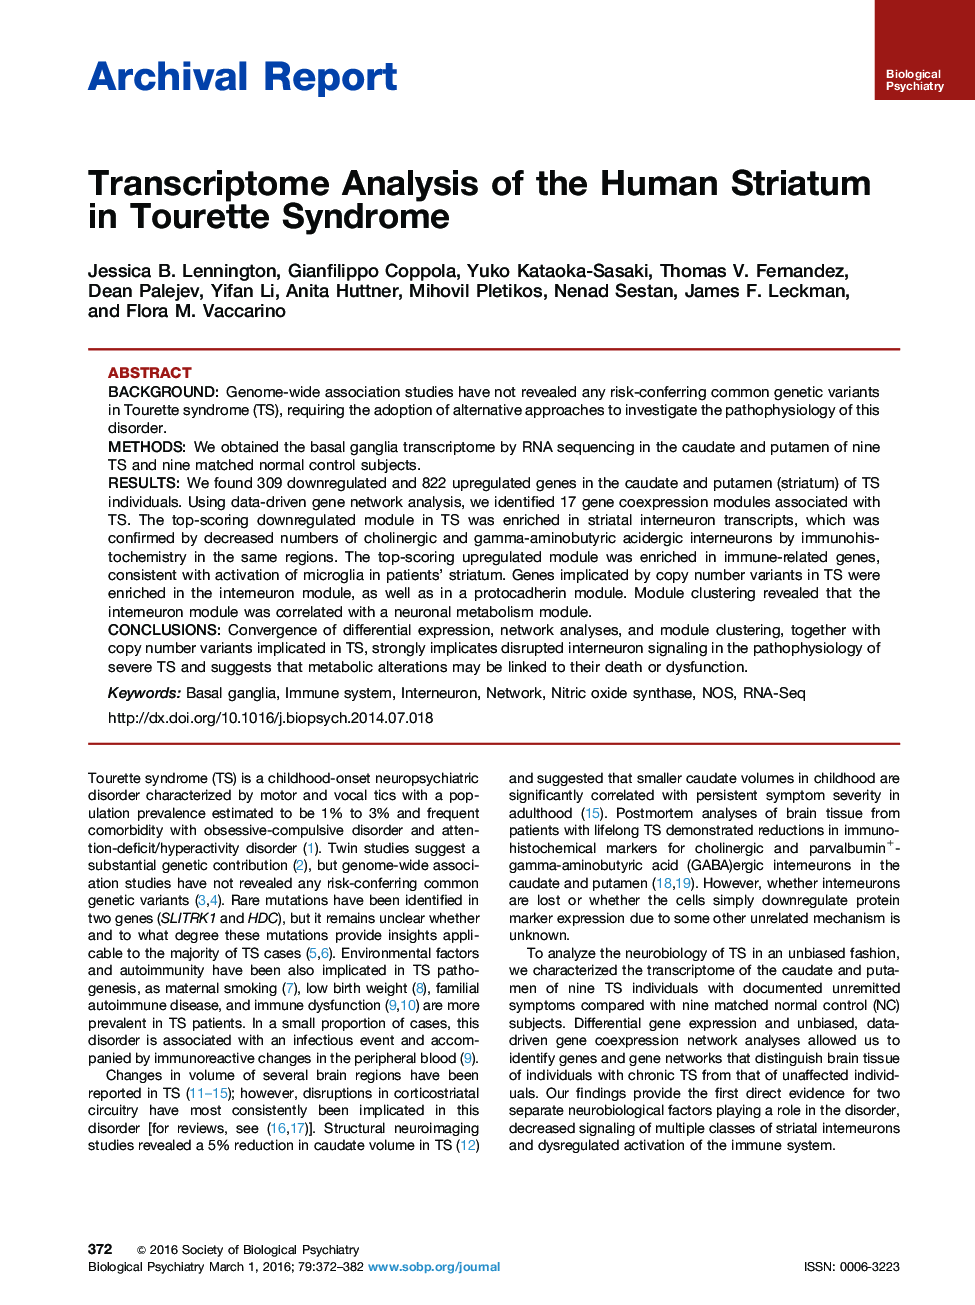 Transcriptome Analysis of the Human Striatum in Tourette Syndrome